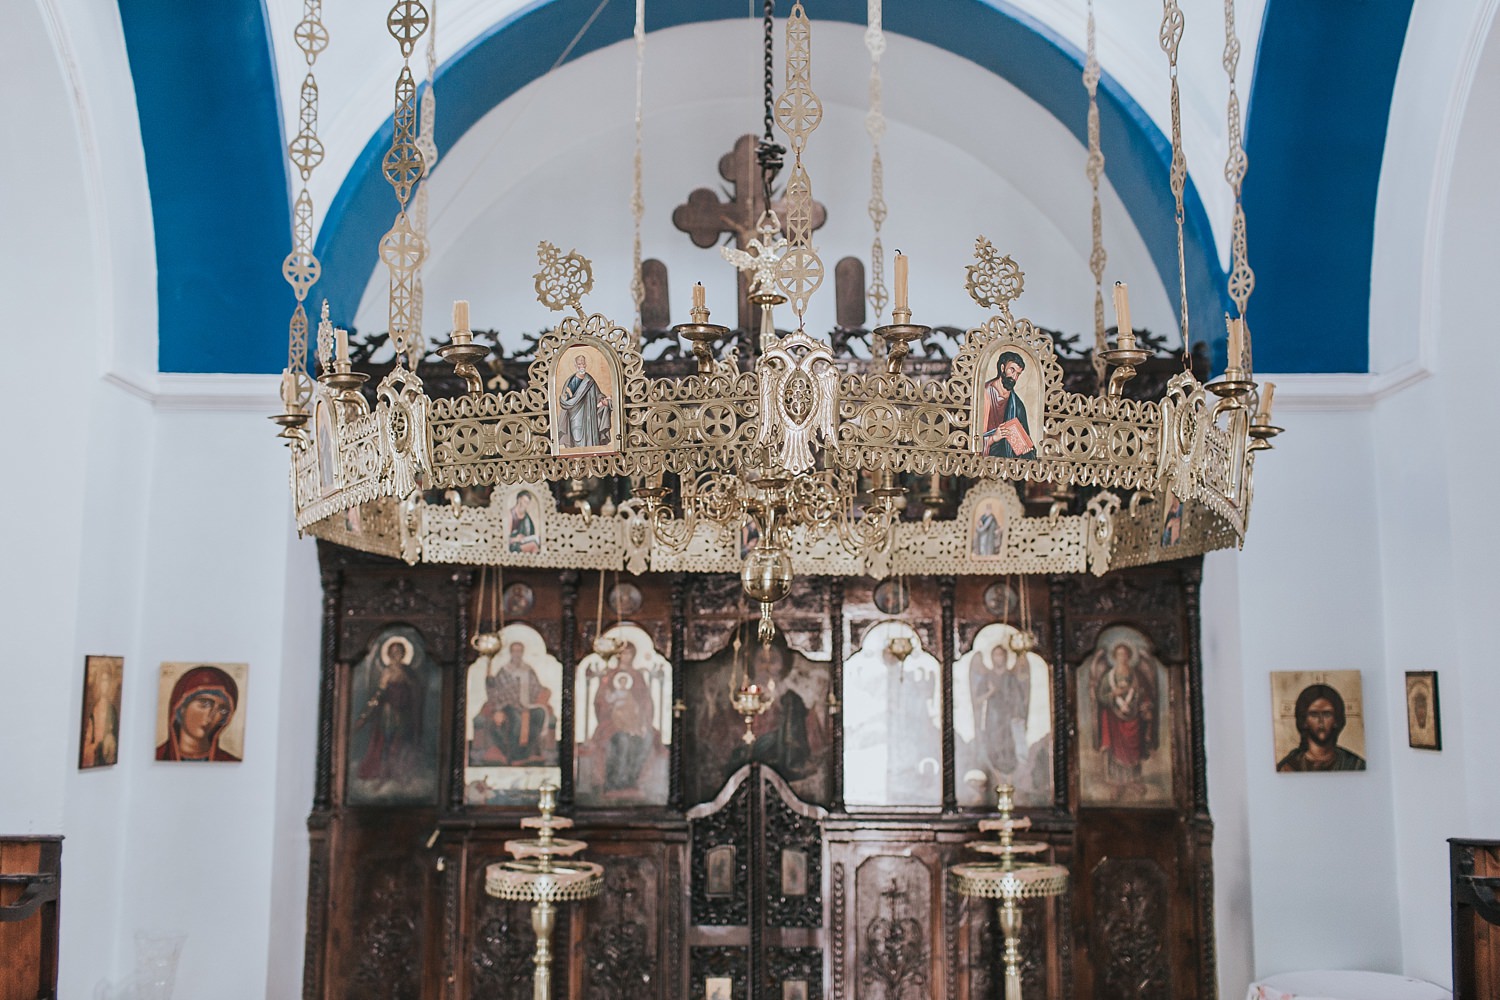 greek orthodox wedding ceremony